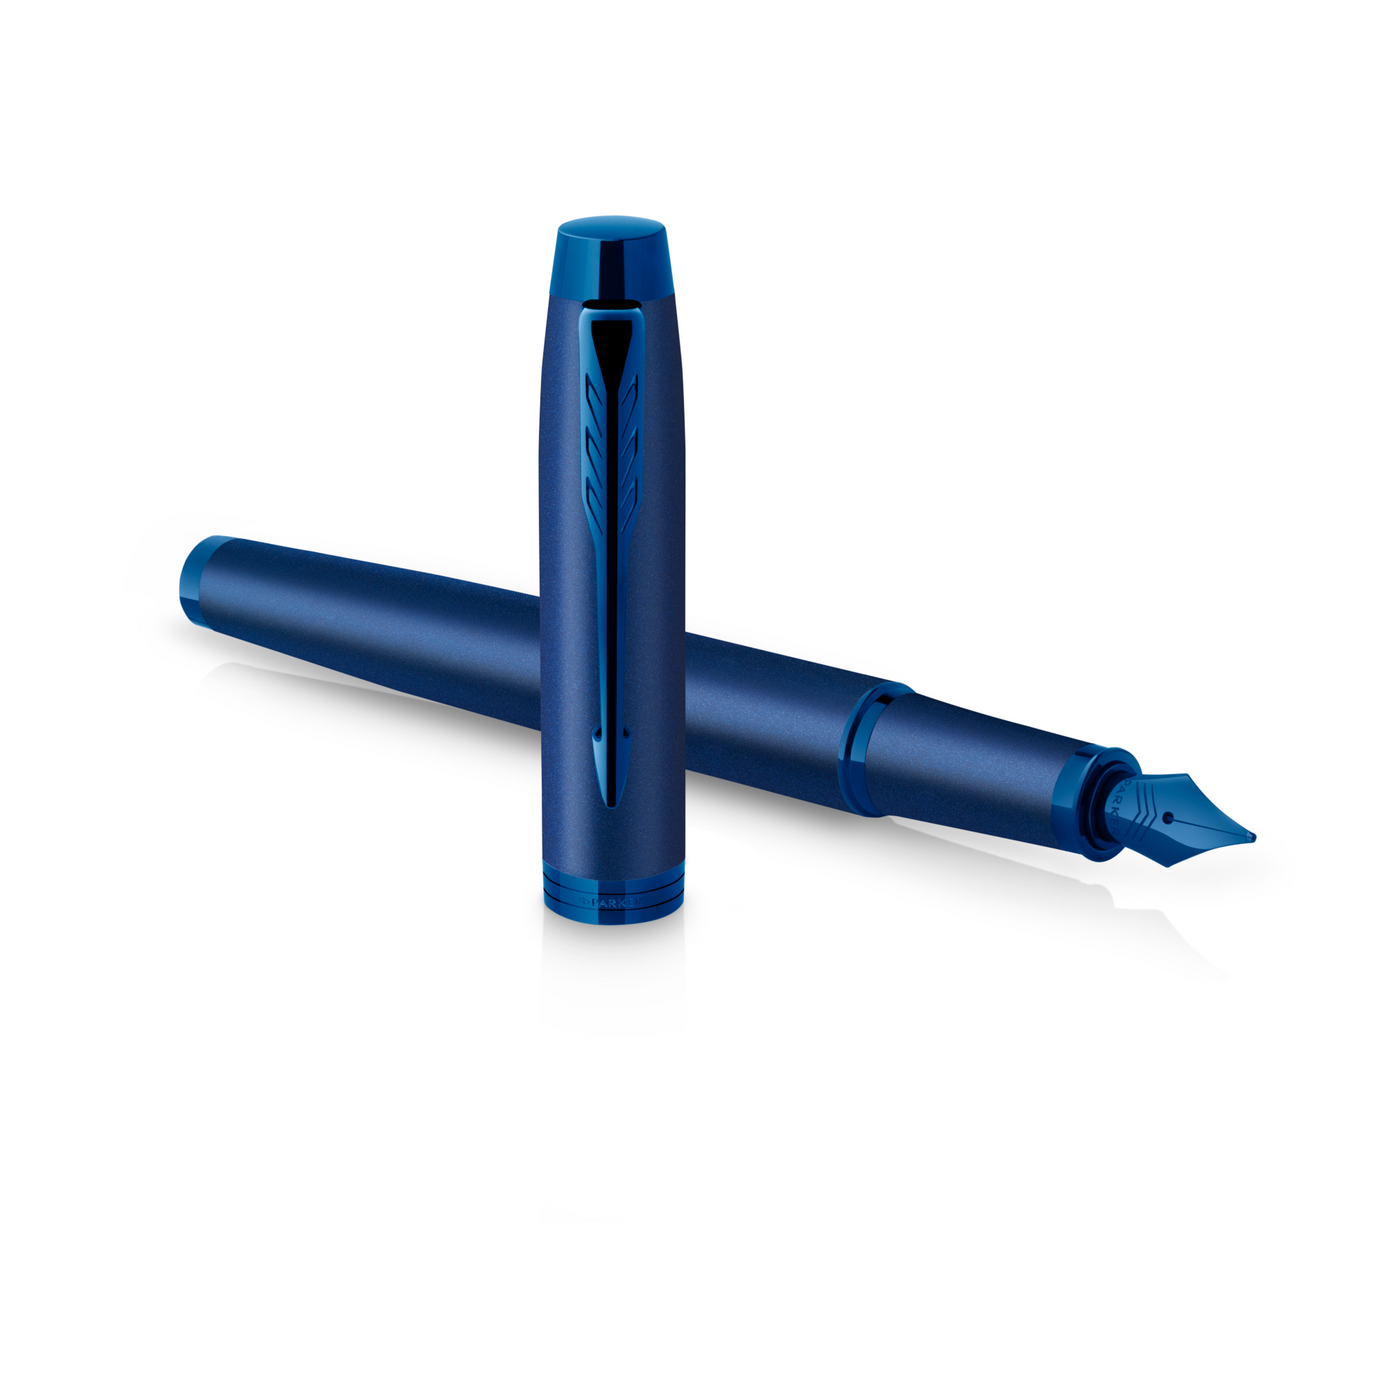 Parker IM Fountain Pen - Monochrome Blue | Atlas Stationers.